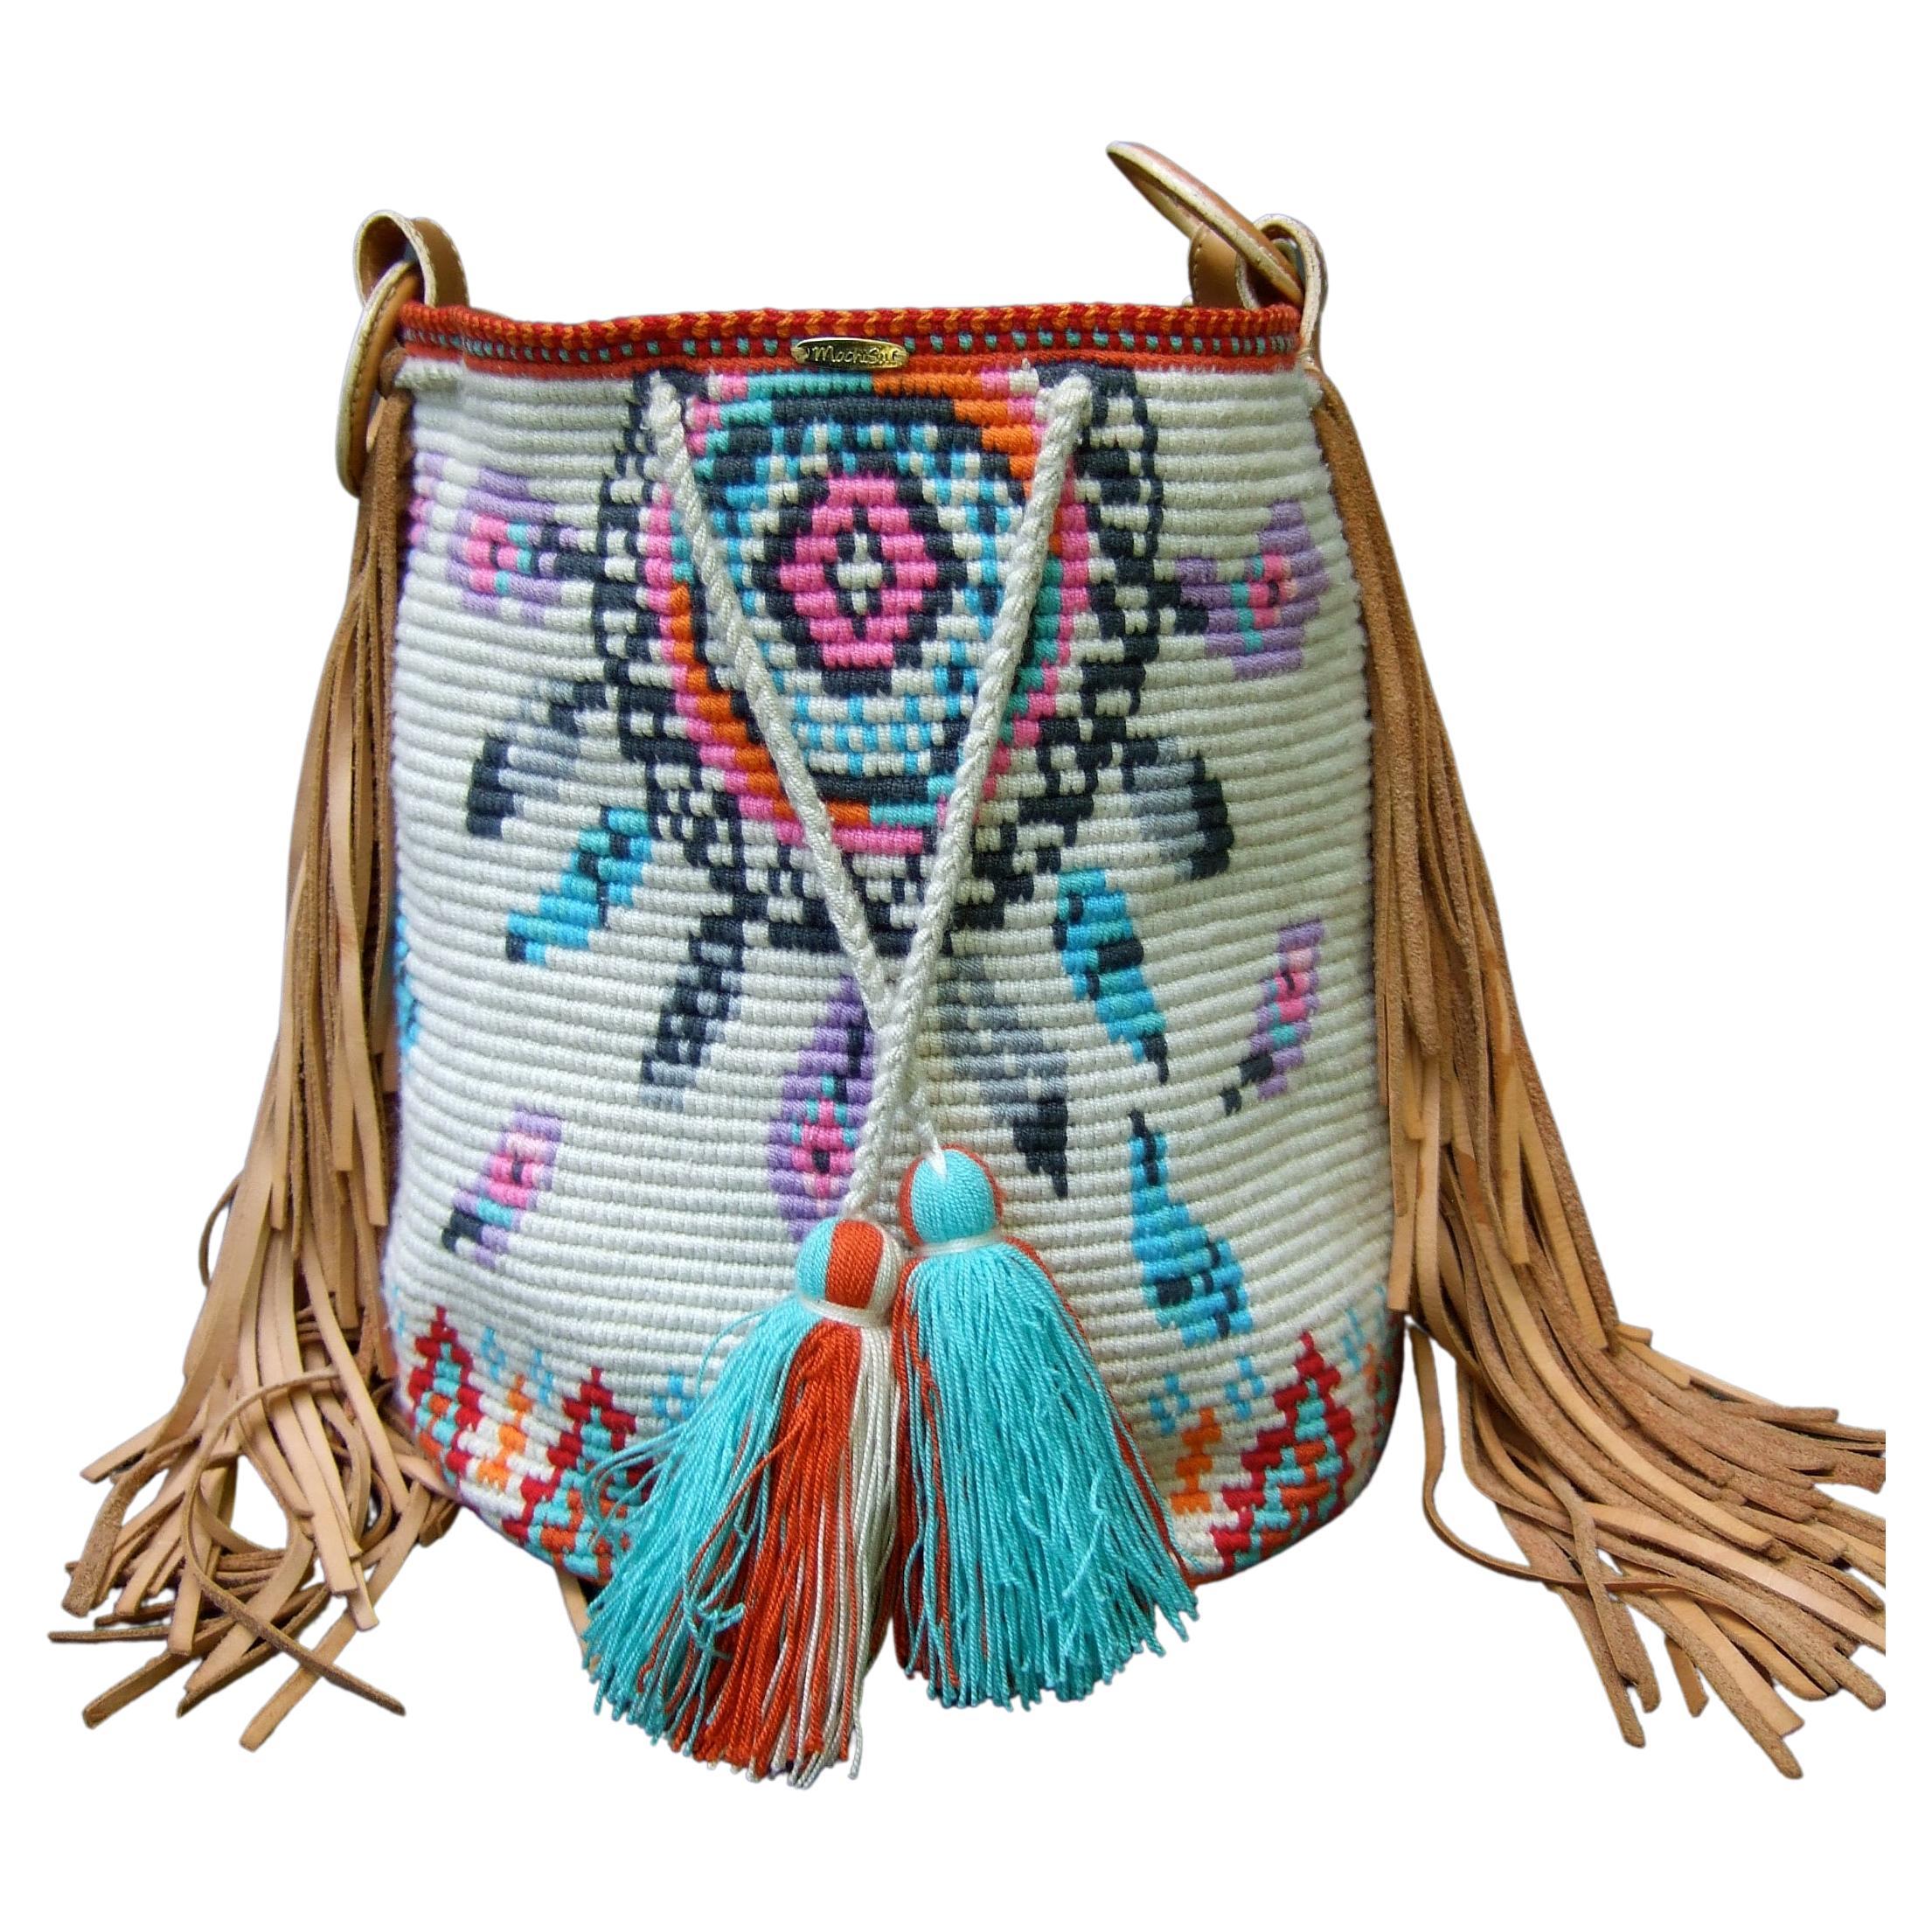  Handmade Woven Wool Knit Artisan Bucket Shoulder Bag c 1990s